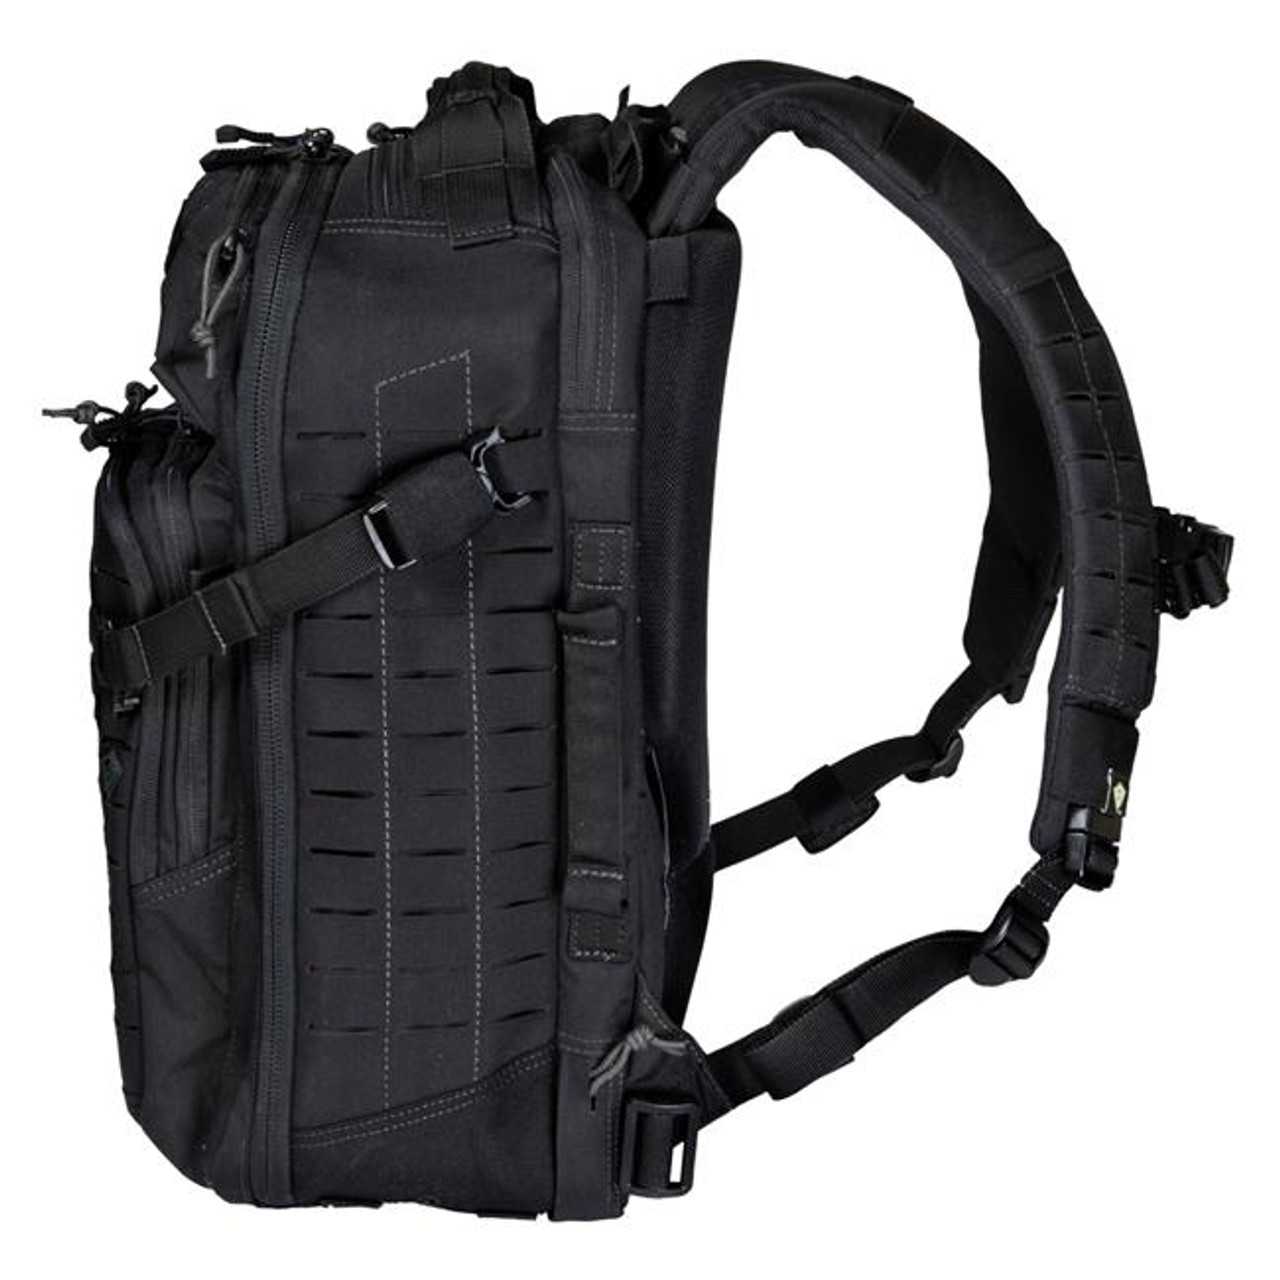 Black Tactix 0.5 Backpack | Military Luggage